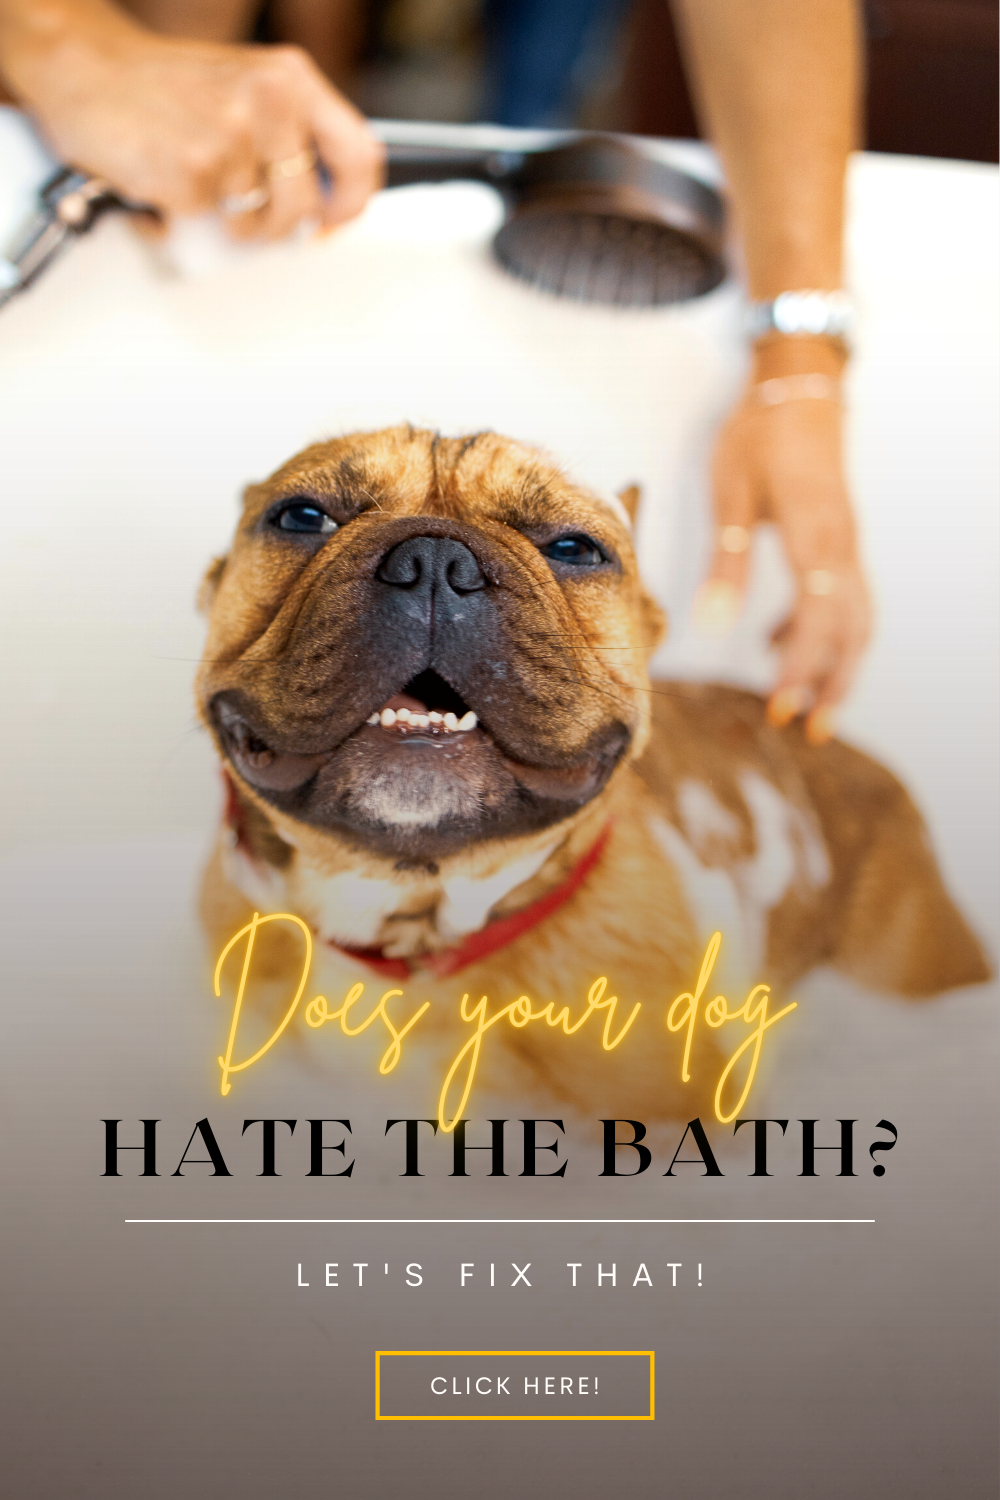 How to make your dog like bath time